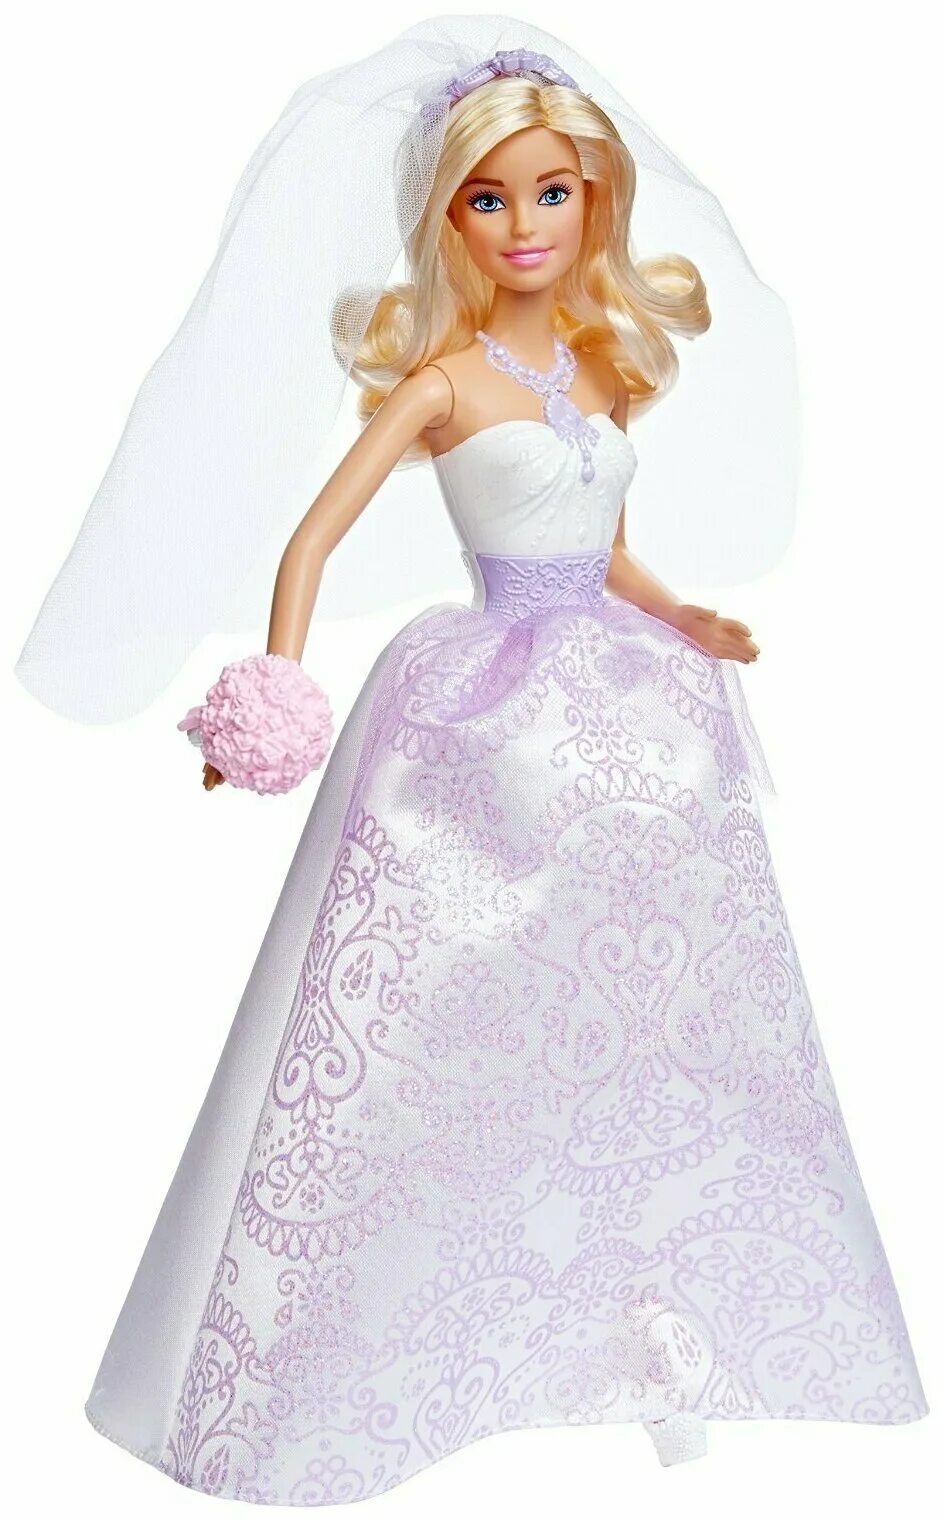 Купить куклу невесту. Барби Сказочная невеста. Барби невеста dhc35. Куклы Barbie Mattel. Невесты Маттел Барби.